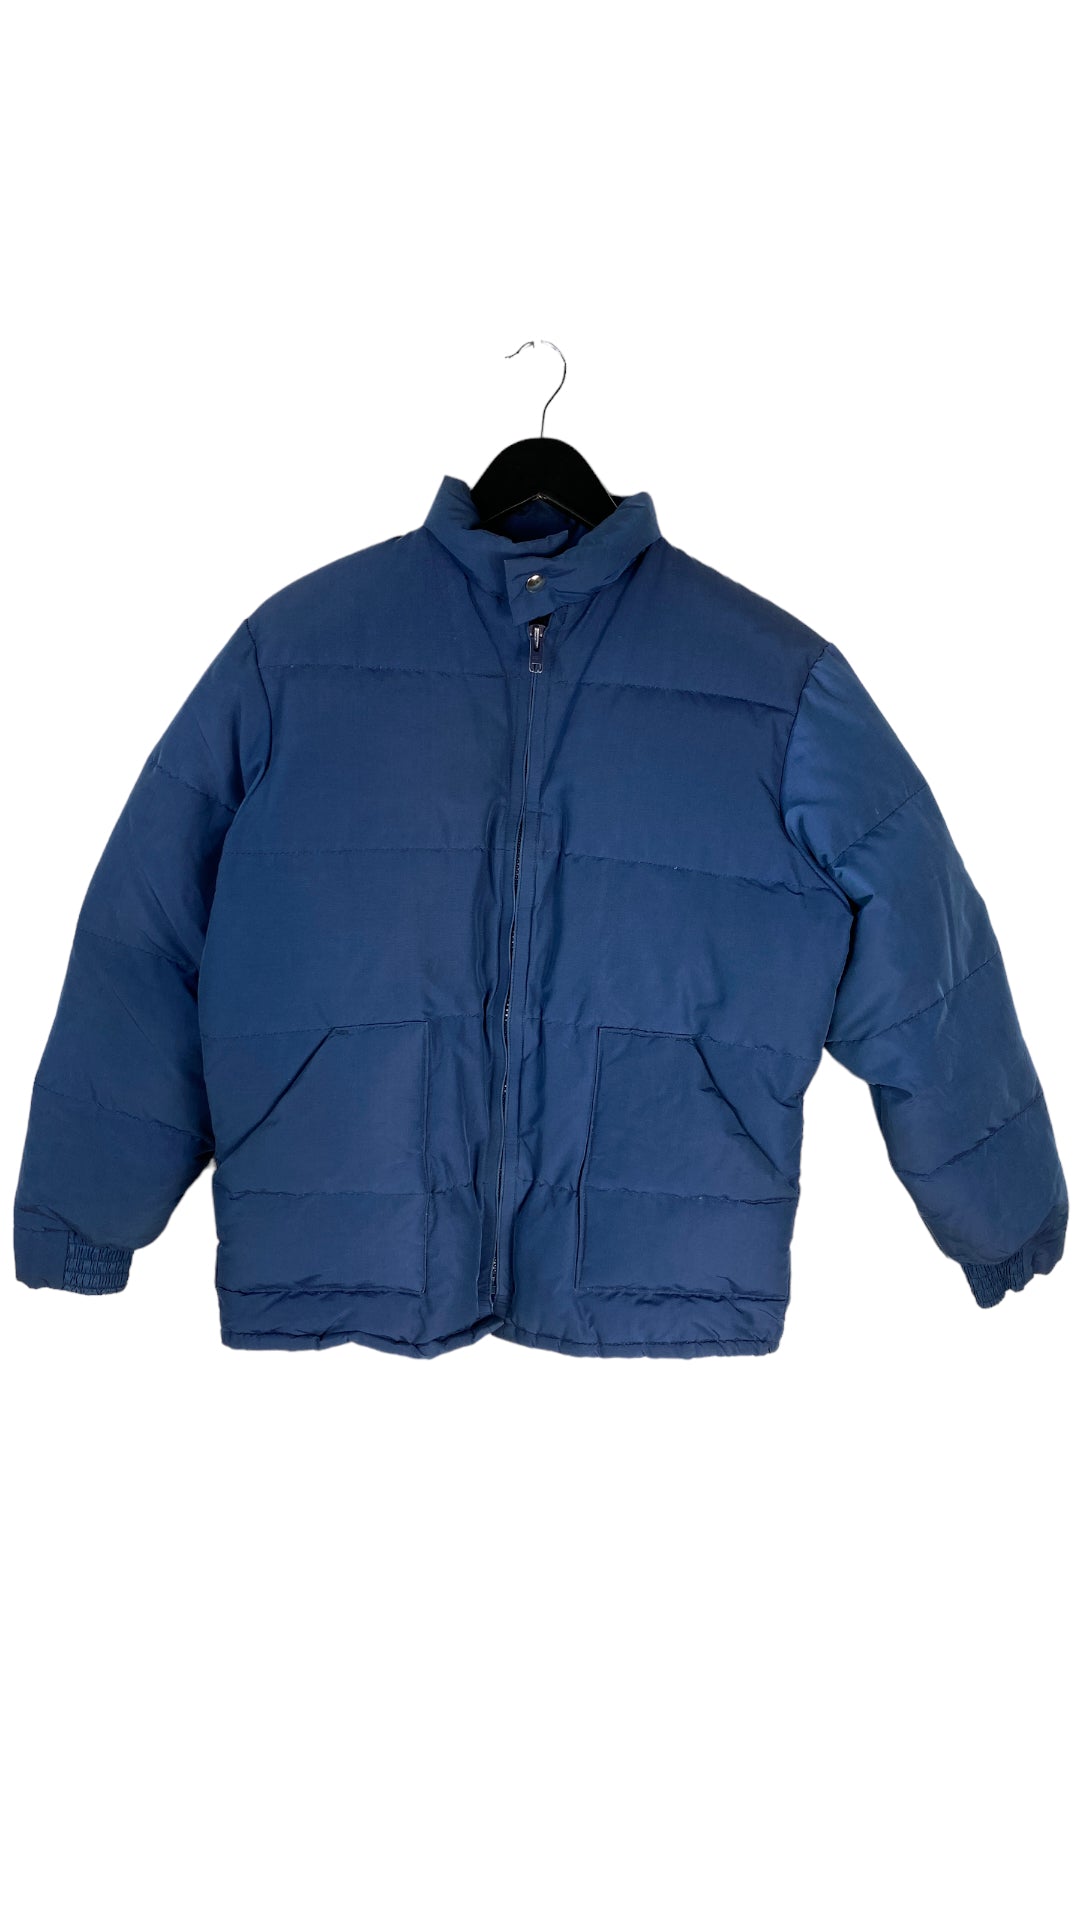 VTG Walls Blue Blizzard Puffer Jacket Sz S